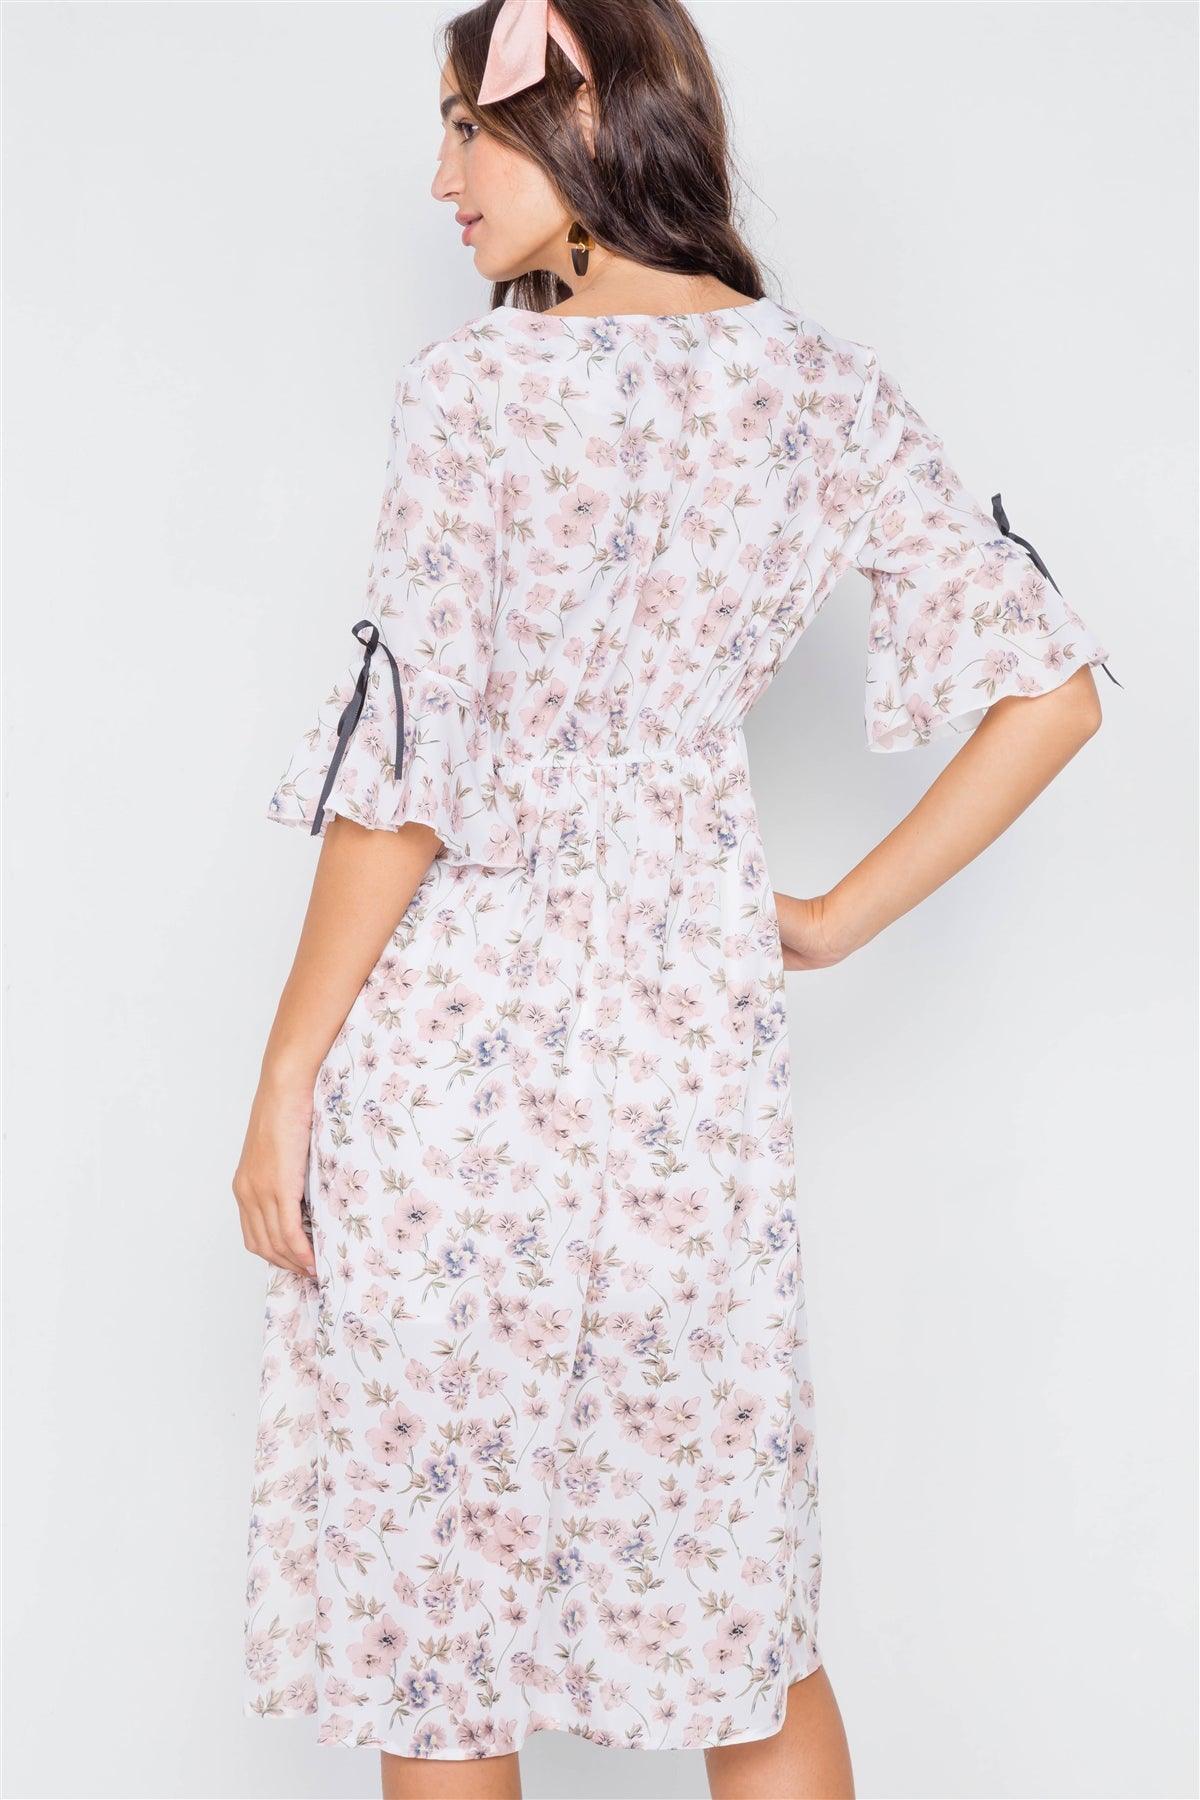 Pink & Ivory Floral Flounce Stretchy Midi Dress /2-2-2